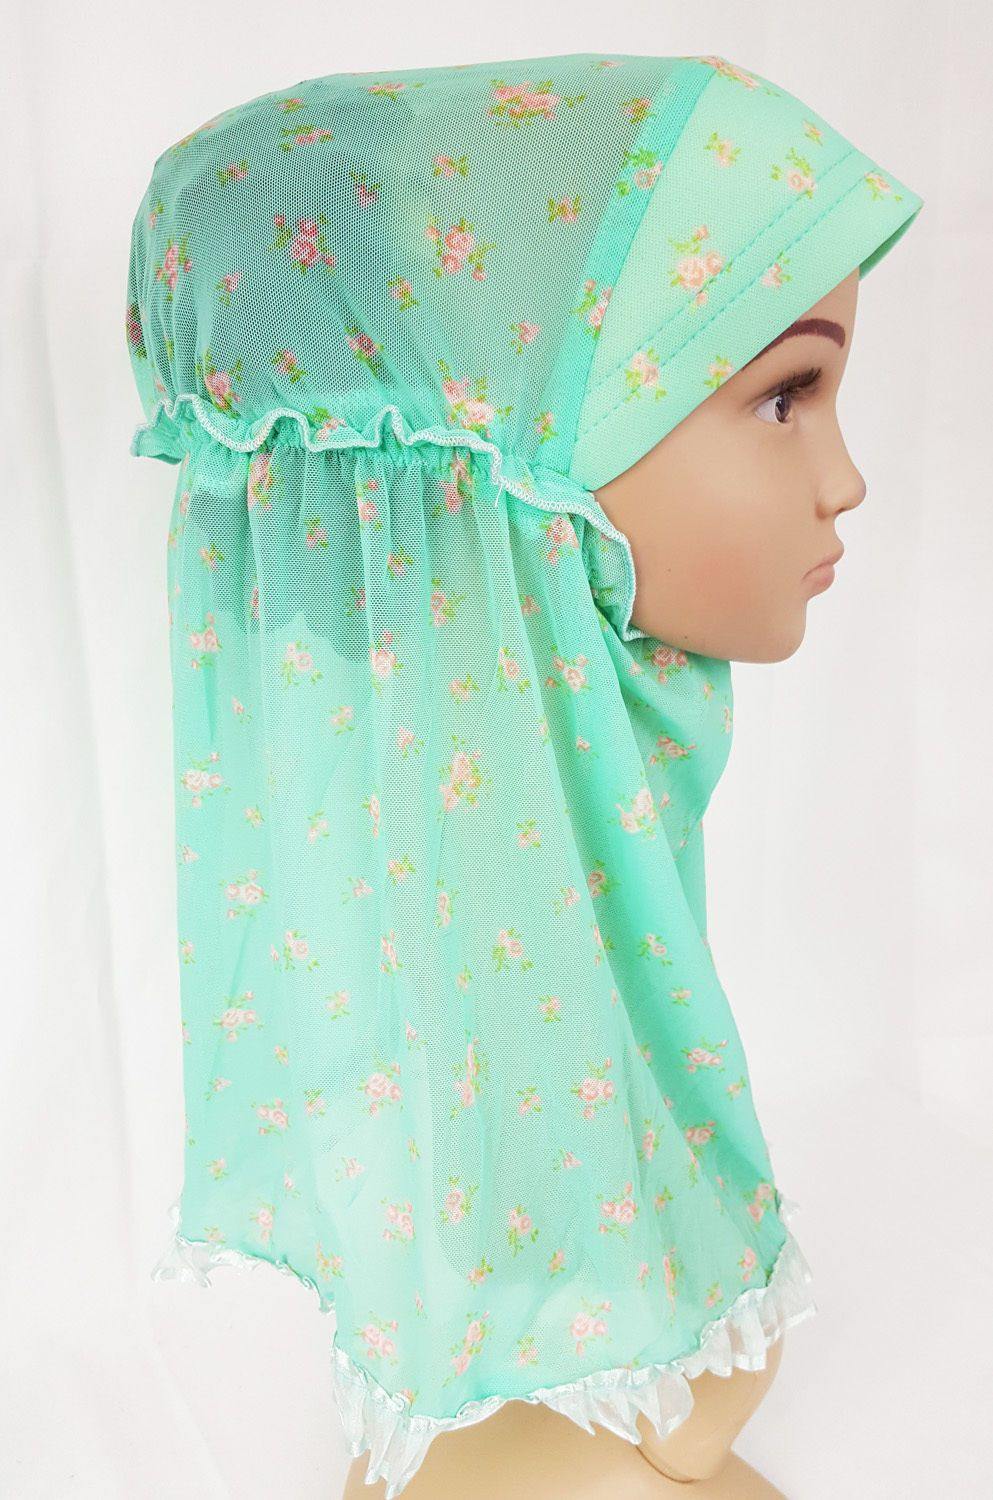 NEW Lace/NetYarn Toddler Kids Children Hijab Islamic Scarf Shawls 2-8T - Arabian Shopping Zone